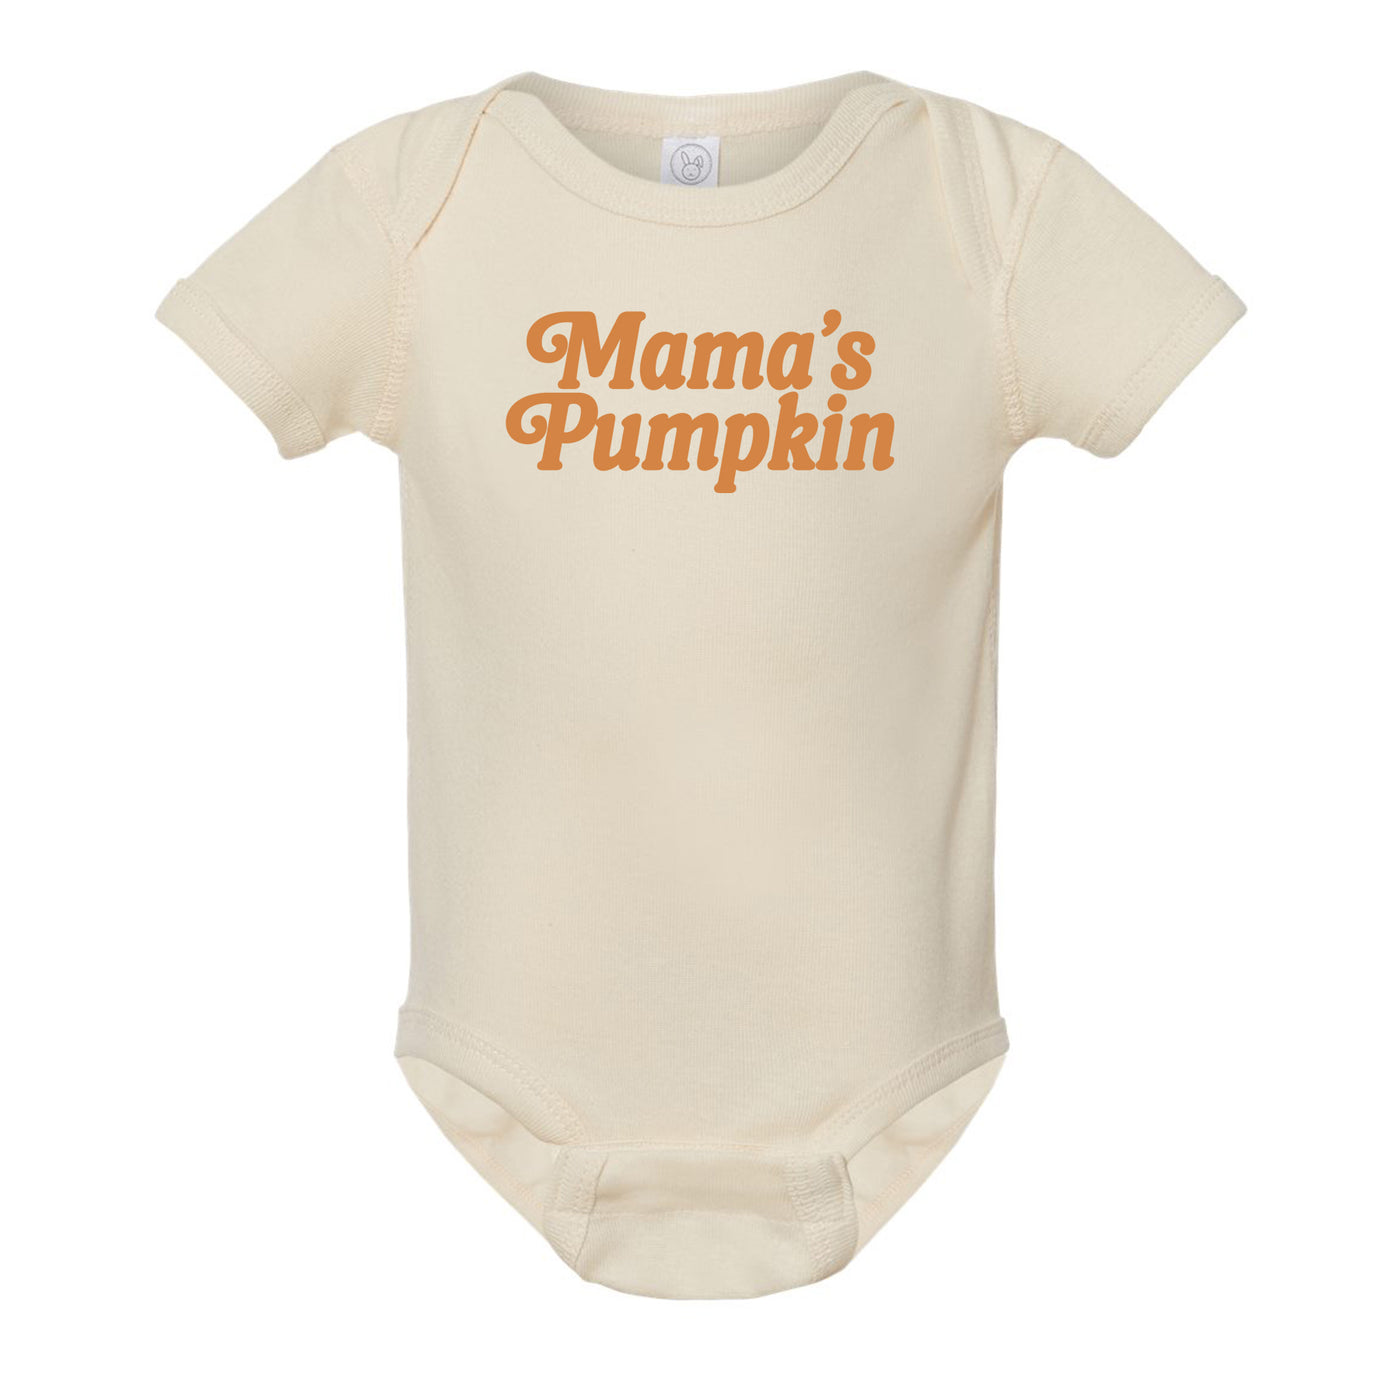 Infant 'Mama's/Little Pumpkin' Onesie